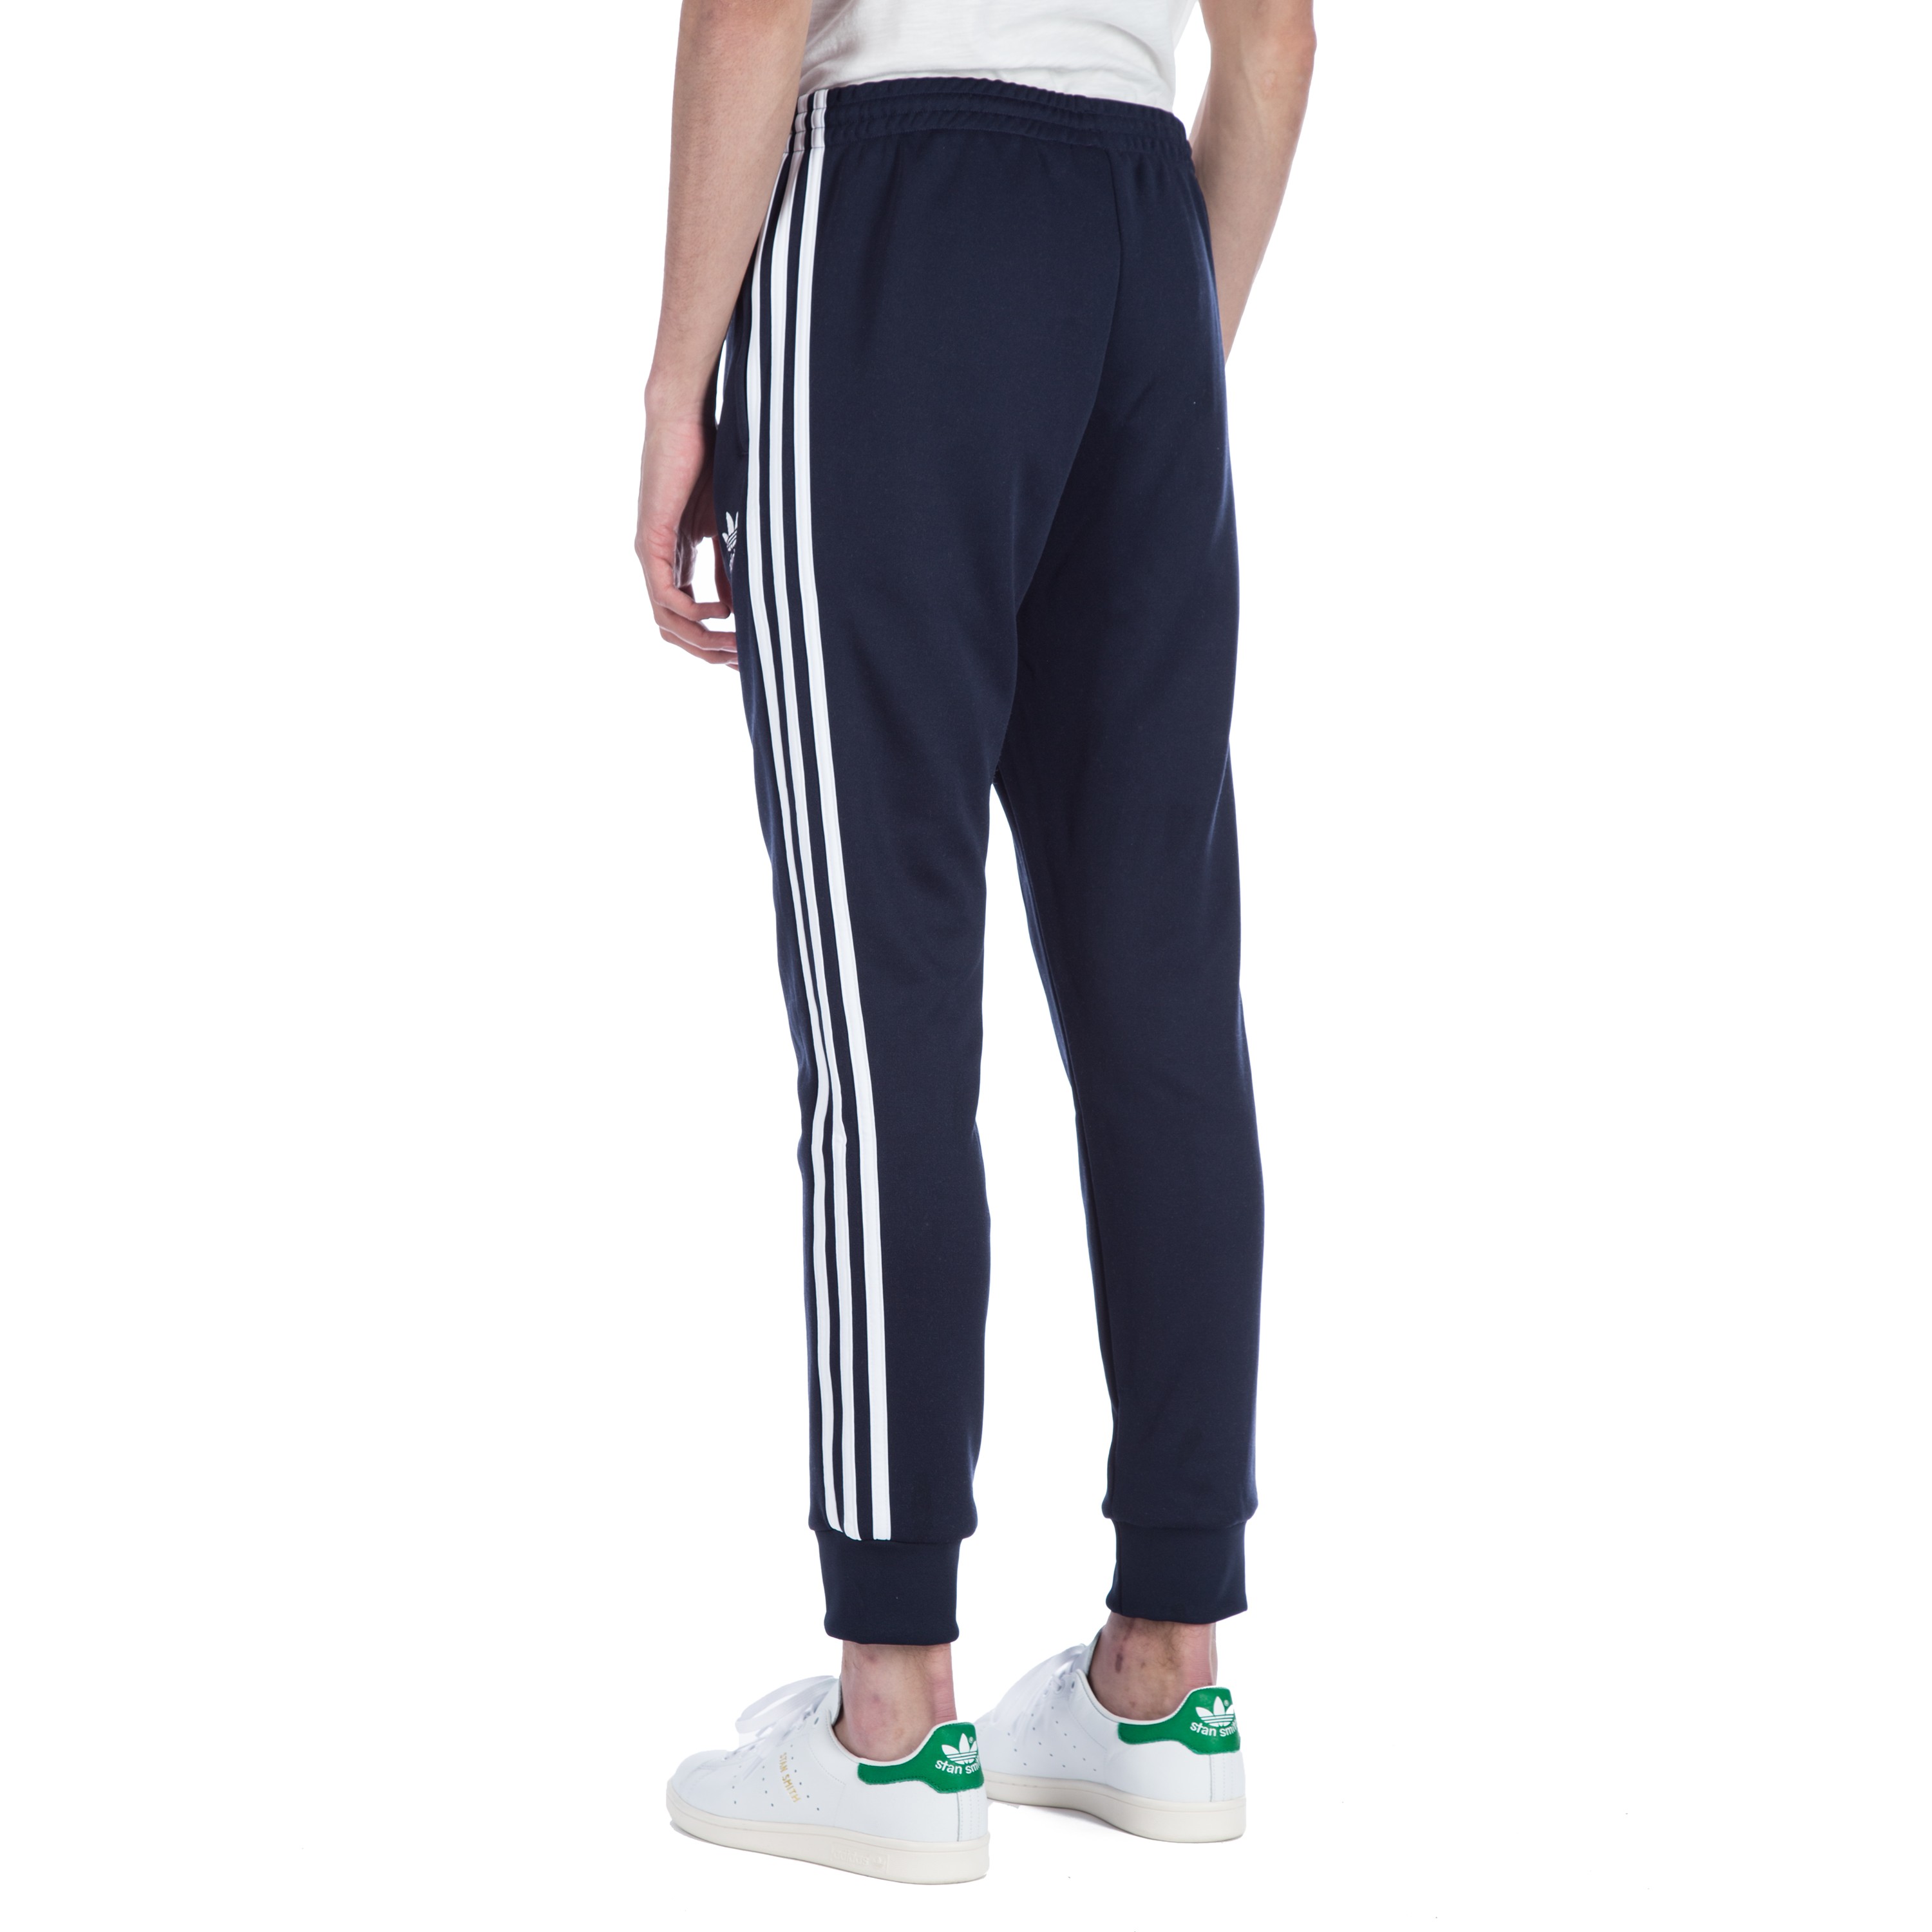 Adidas Superstar Cuffed Track Pants (Legend Ink) - Consortium.